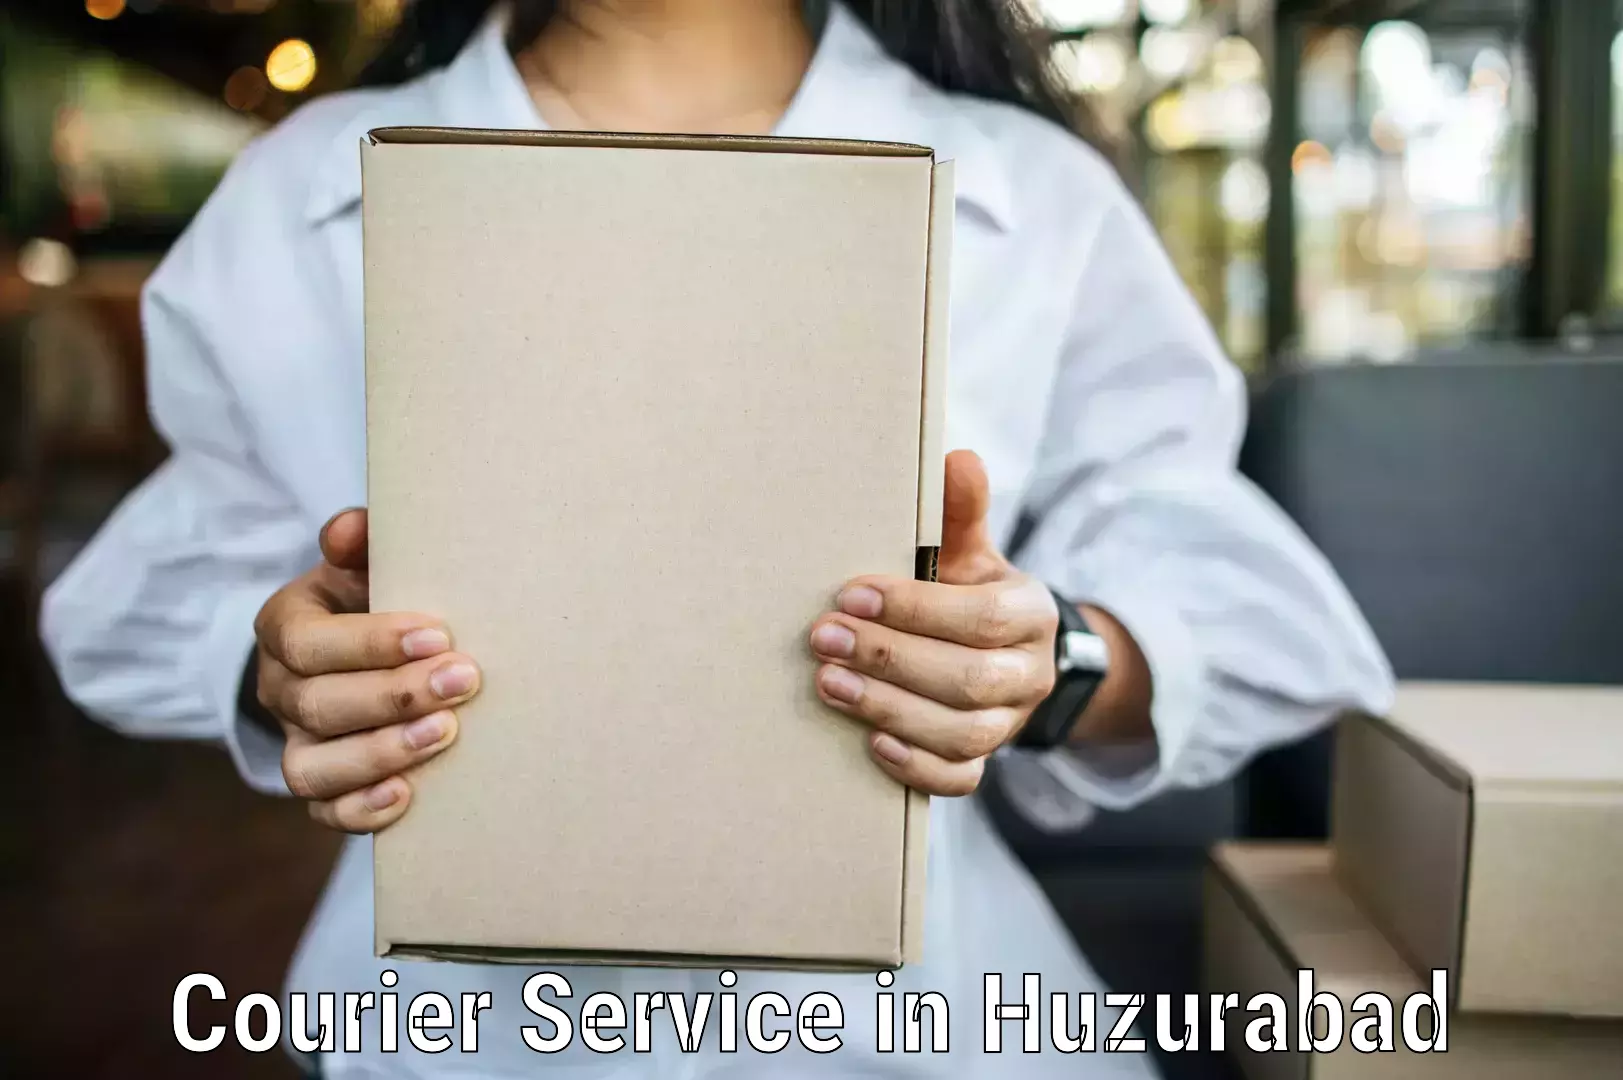 Nationwide delivery network in Huzurabad